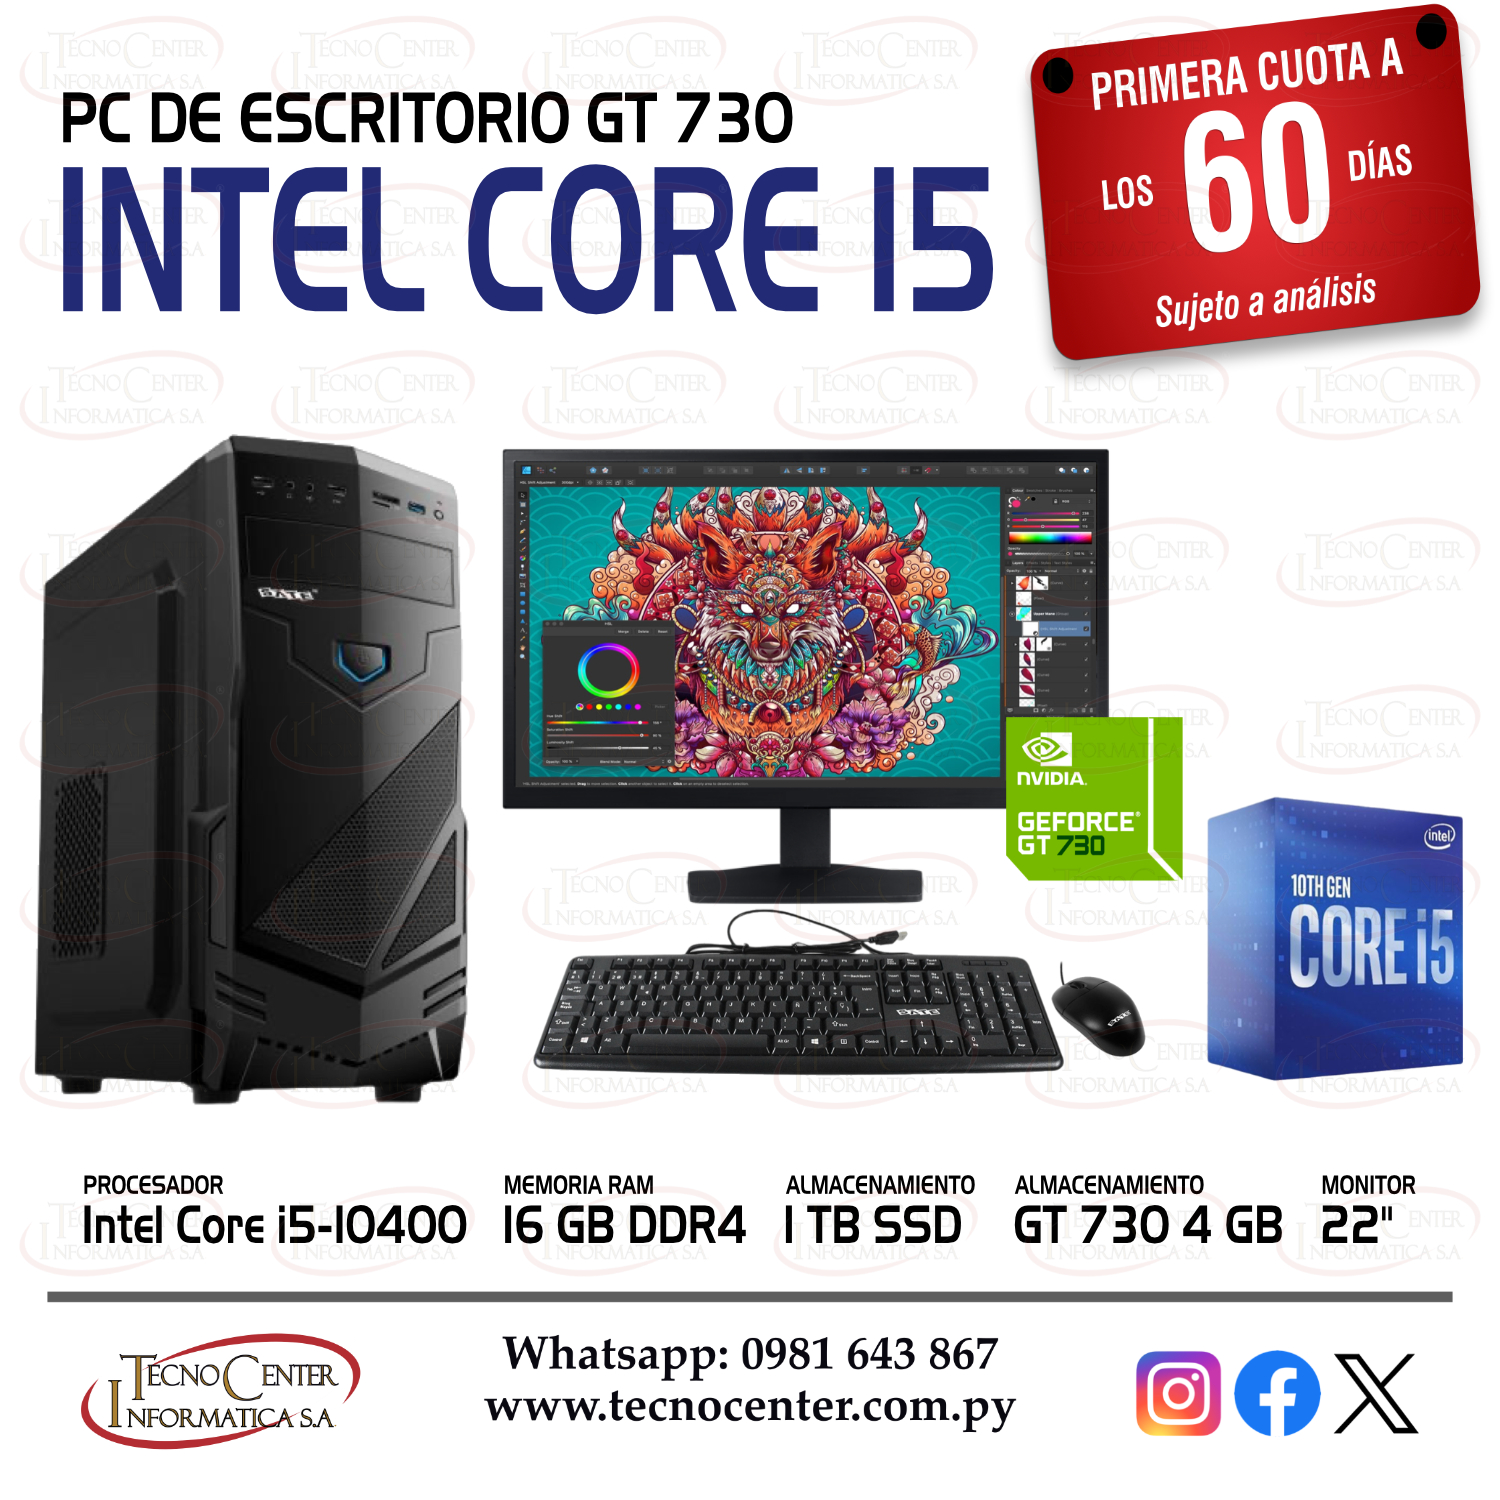 PC de Escritorio GT 730 Intel Core i5